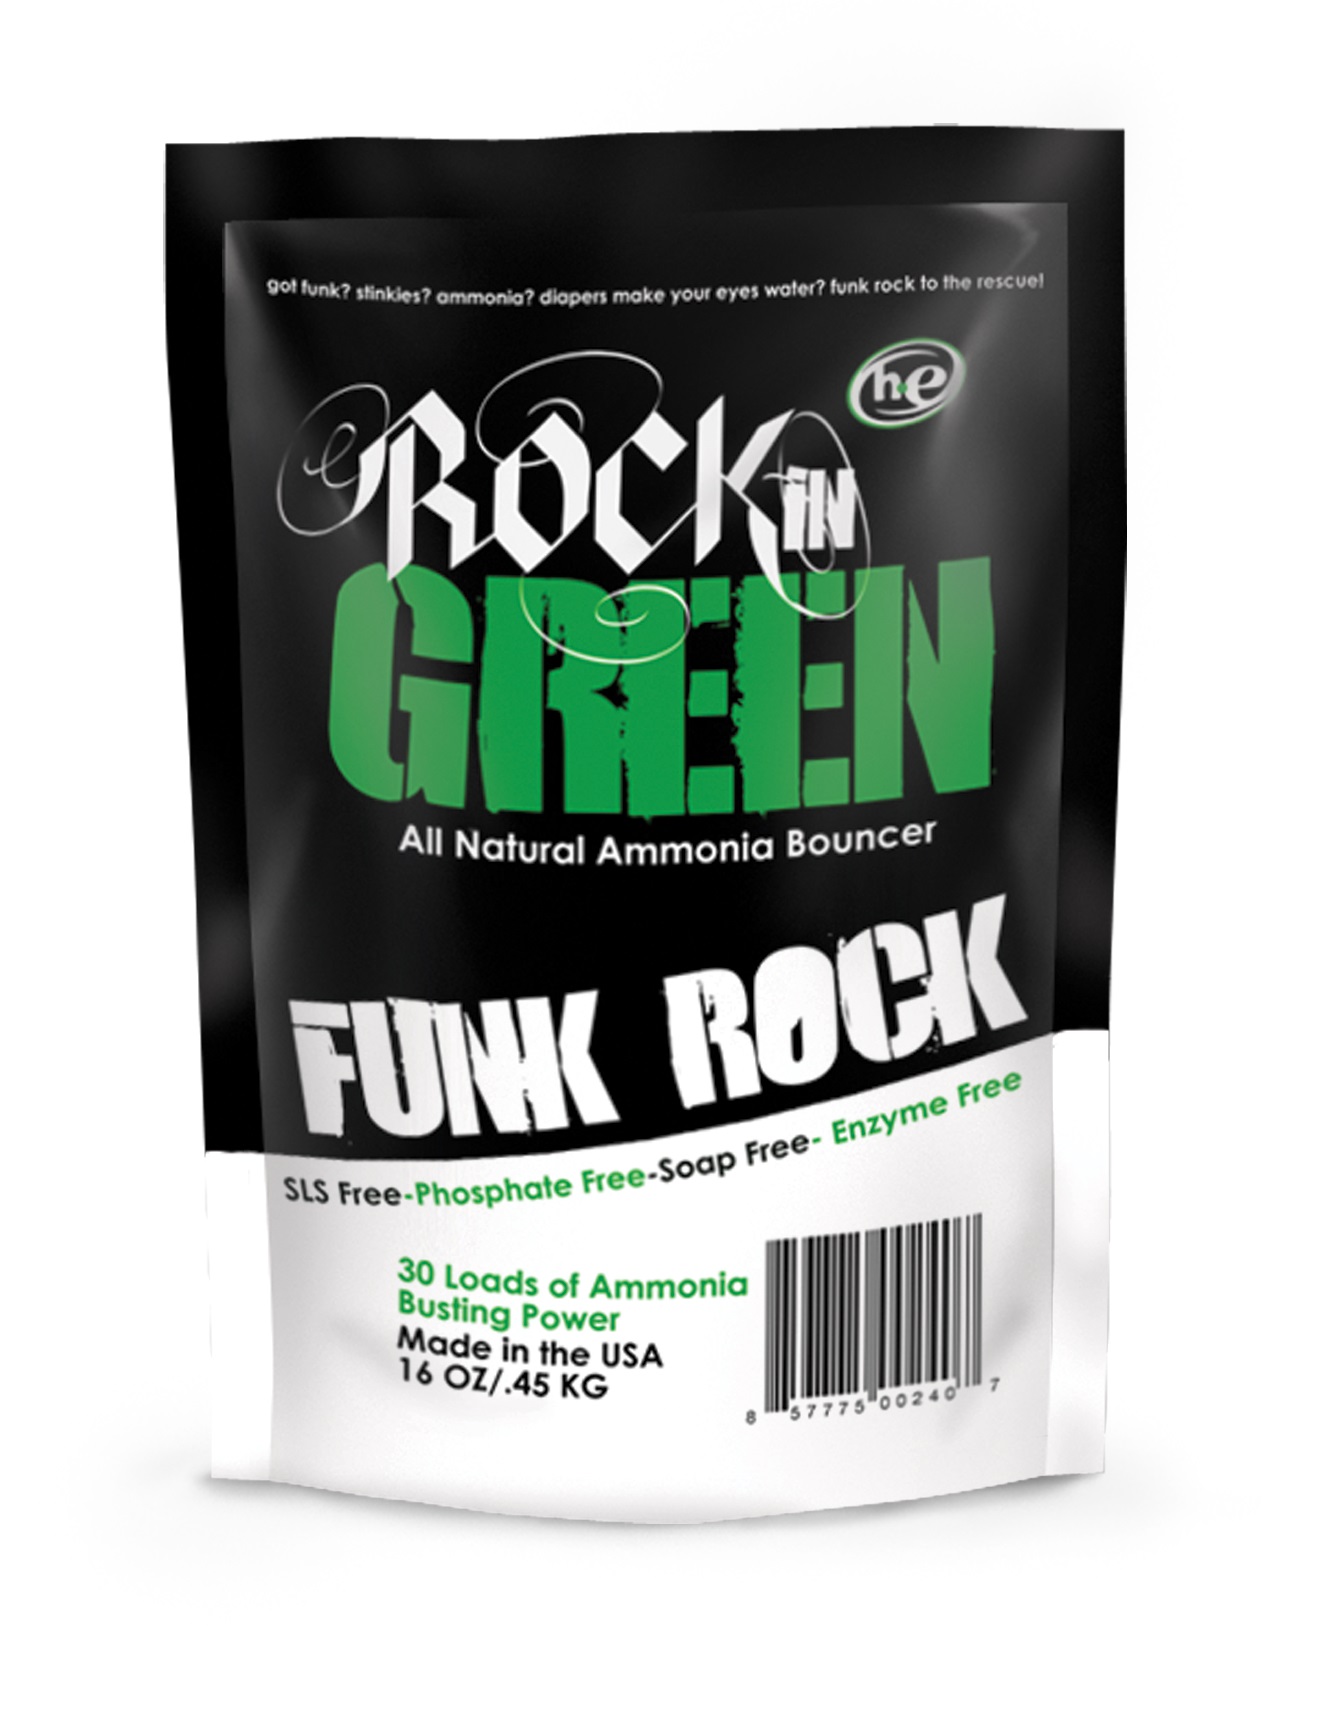 Фонк рок. Funk Rock. Хариро фанк Грин. SEGUAA Funky Green. Rock it Funk.